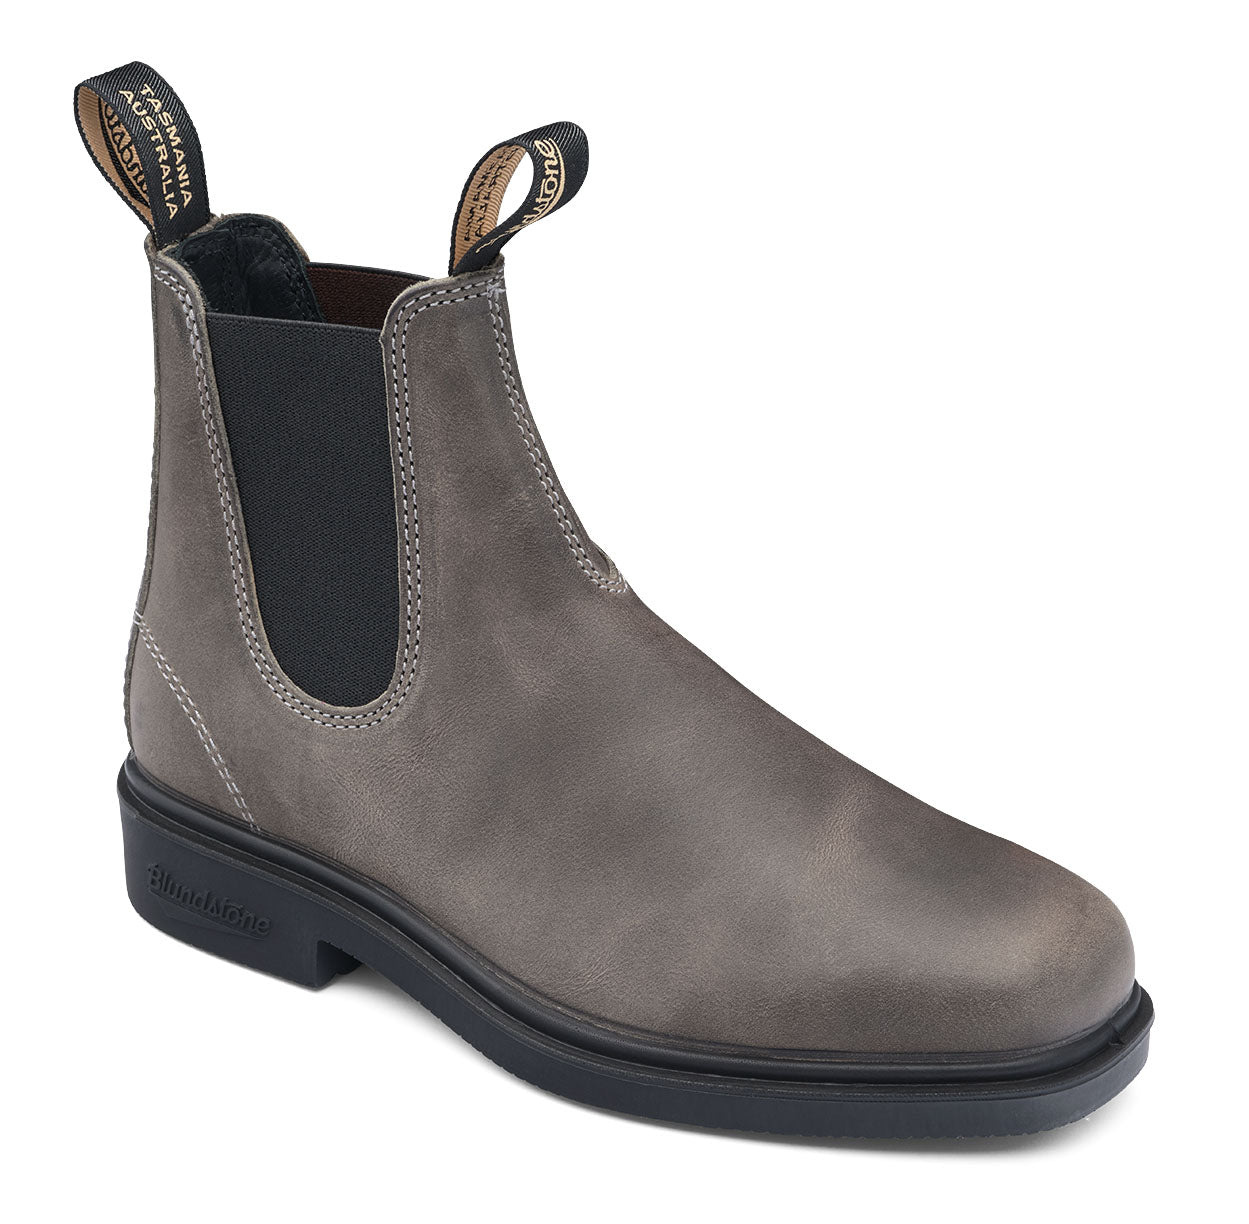 Blundstone 1395 Dress Boot Steel Grey - Grady’s Feet Essentials - Blundstone